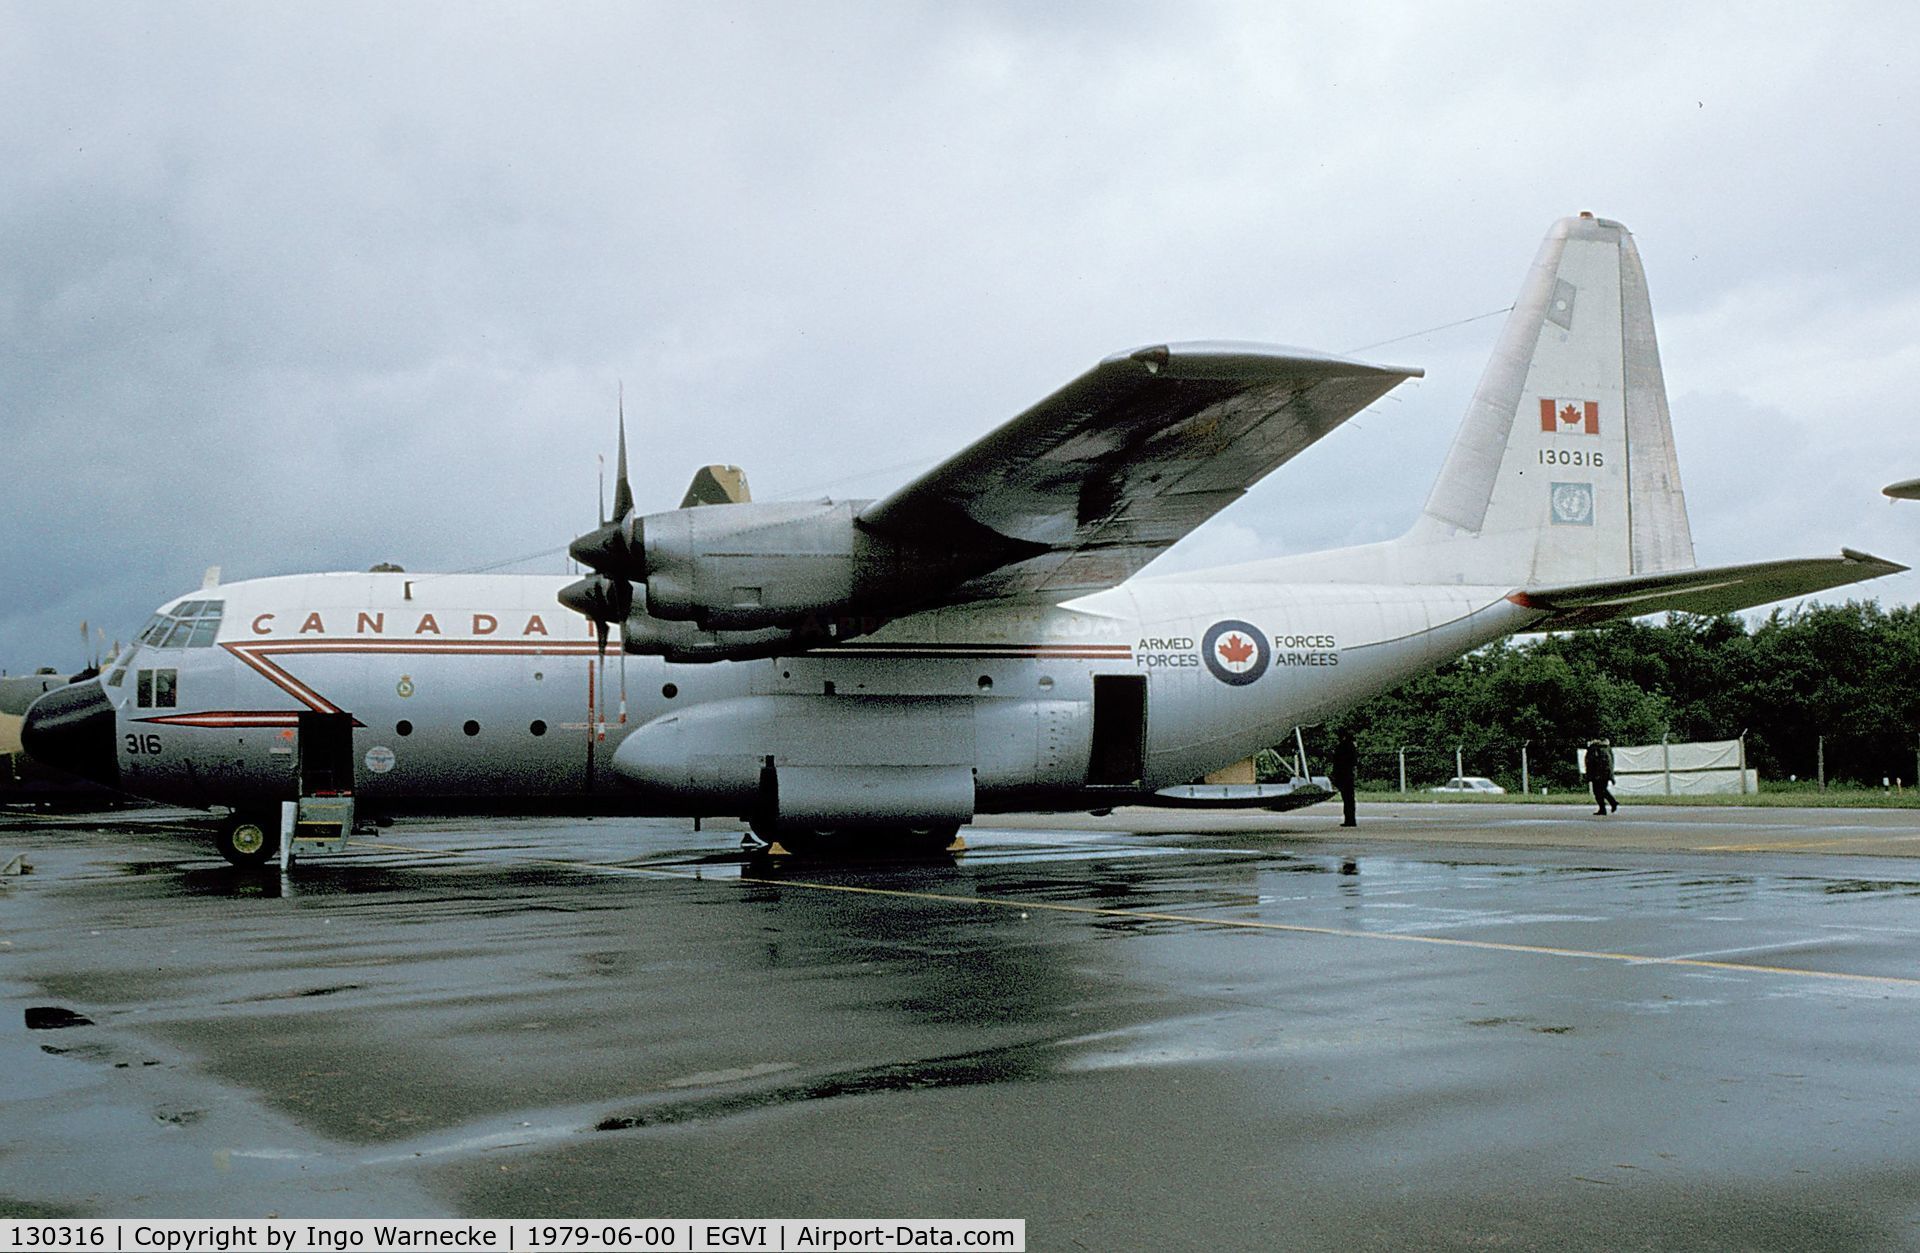 130316, 1965 Lockheed CC-130E Hercules C/N 382-4075, Lockheed CC-130E Hercules of the Canadian Air Force at the 1979 International Air Tattoo, Greenham Common